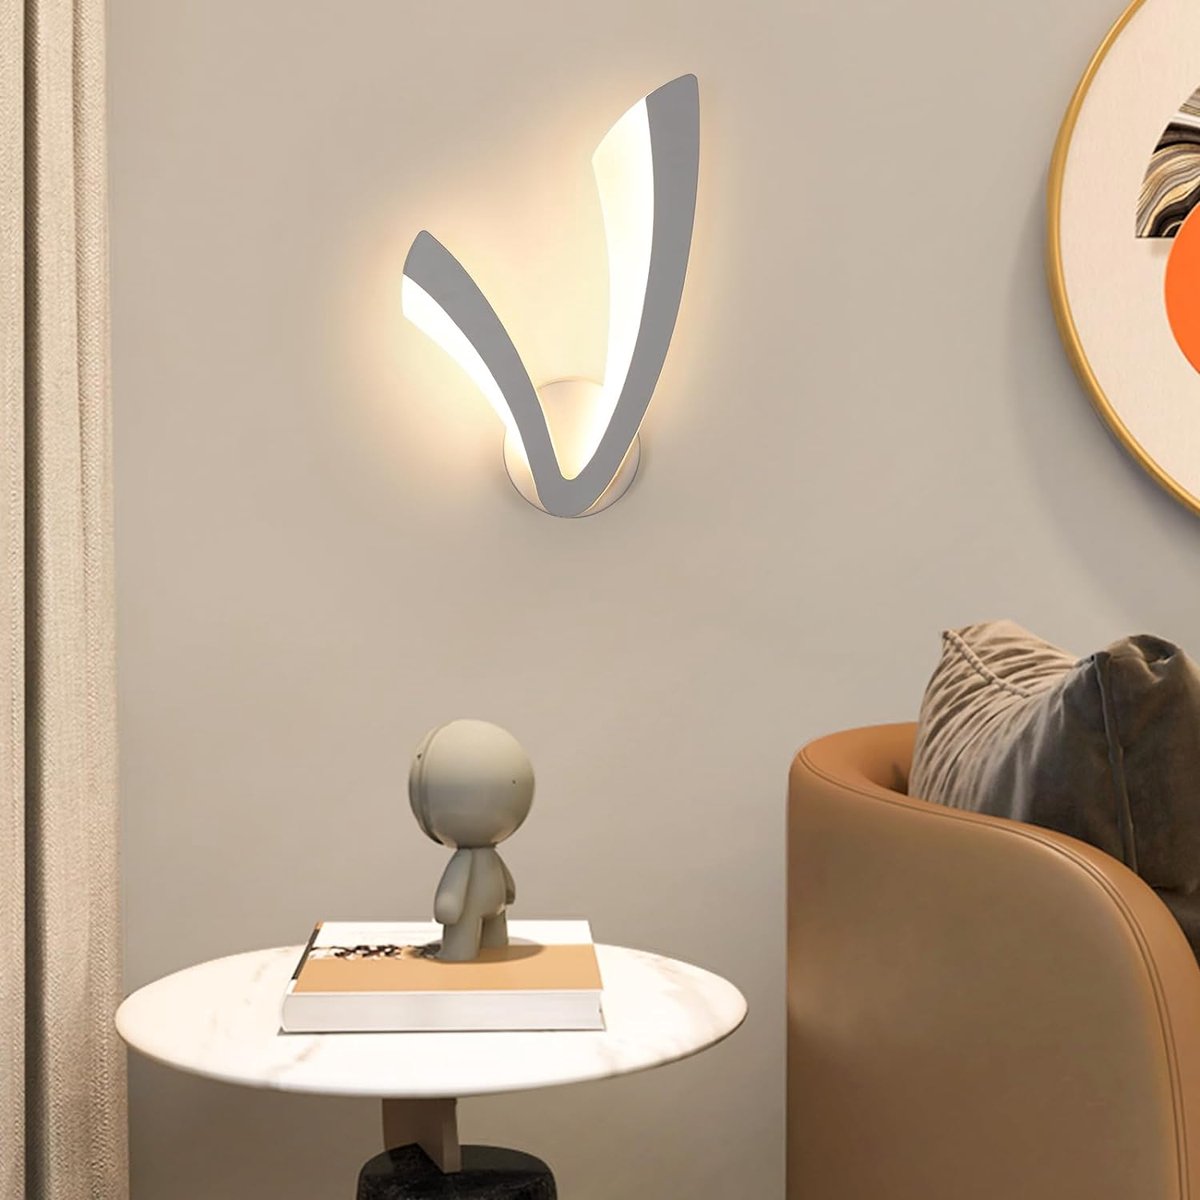 Goeco Wandlampen - LED-binnen - moderne - wit - acryl V-vormige - 3000K warm wit licht - 35CM